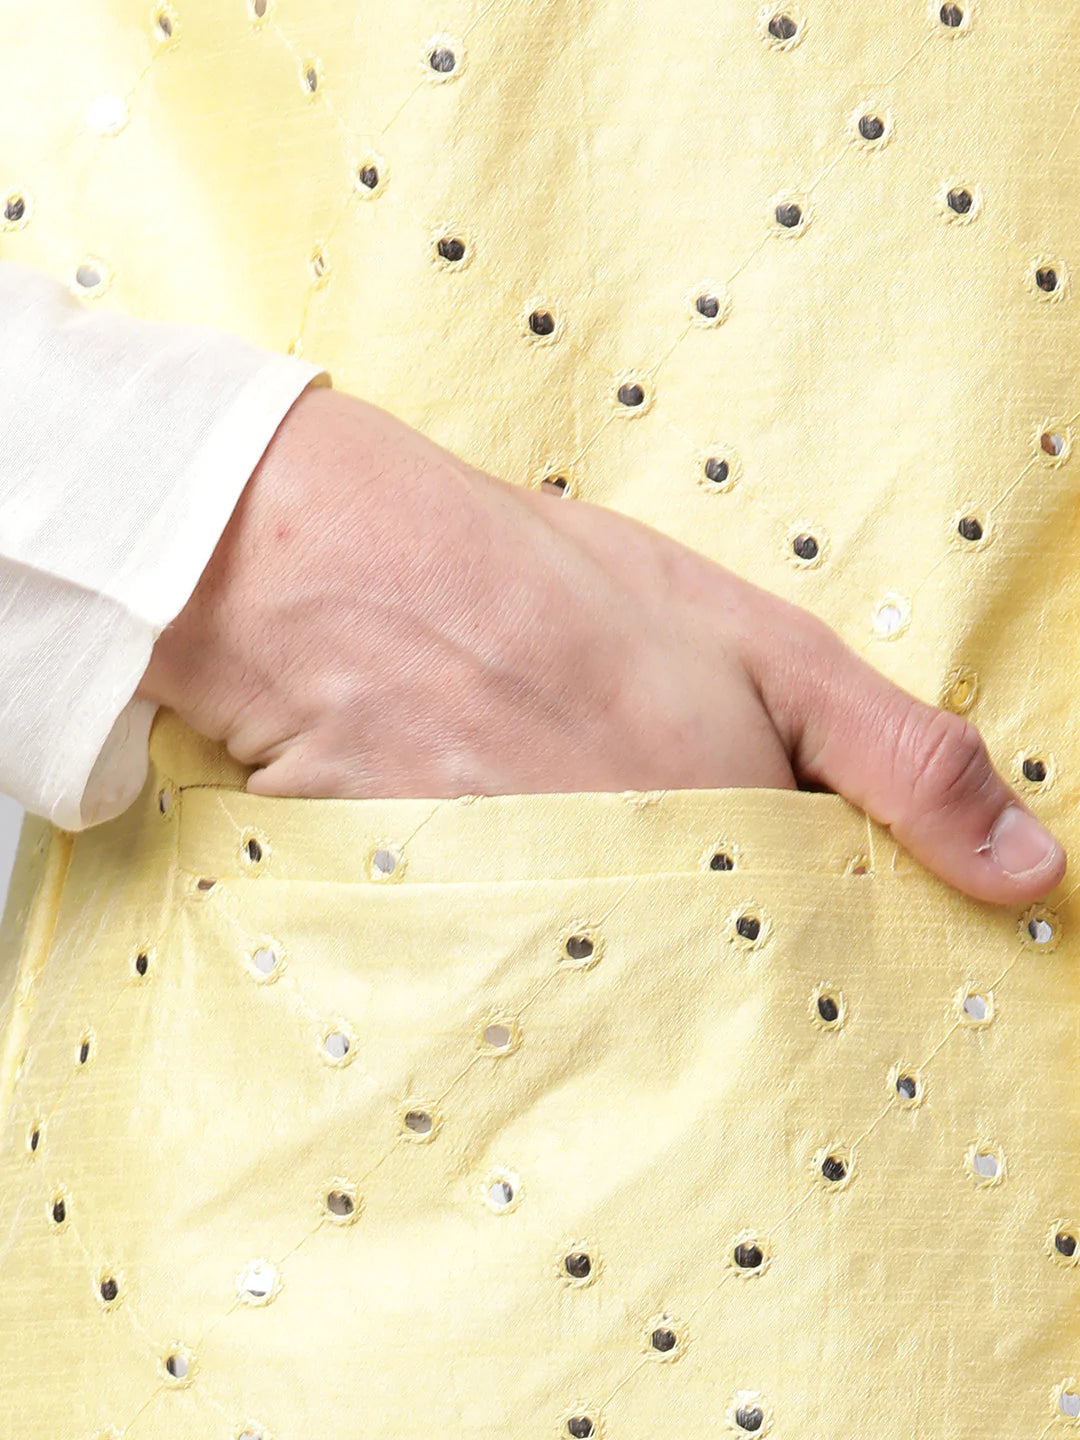 Men Dupion Silk Kurta Pyjama With Yellow Mirror Work Nehru Jacket( JOKPWC W-D 4040Yellow )